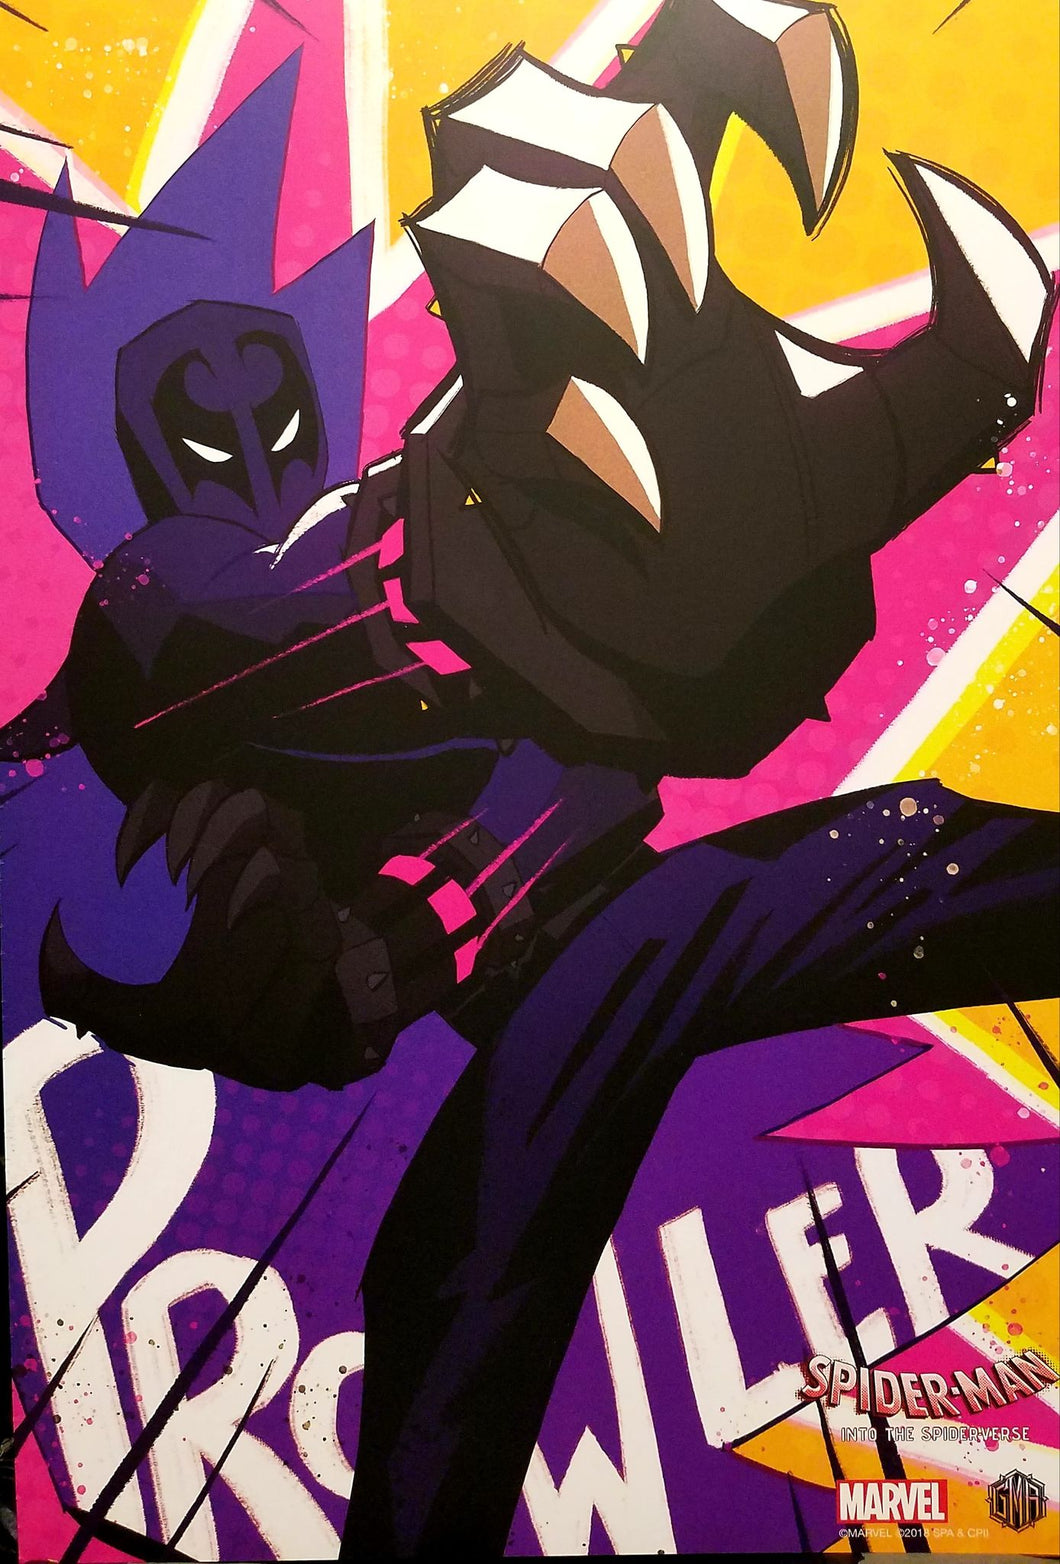 Spider Verse Prowler 11x16 Art Print Poster Miles Morales Spider Man